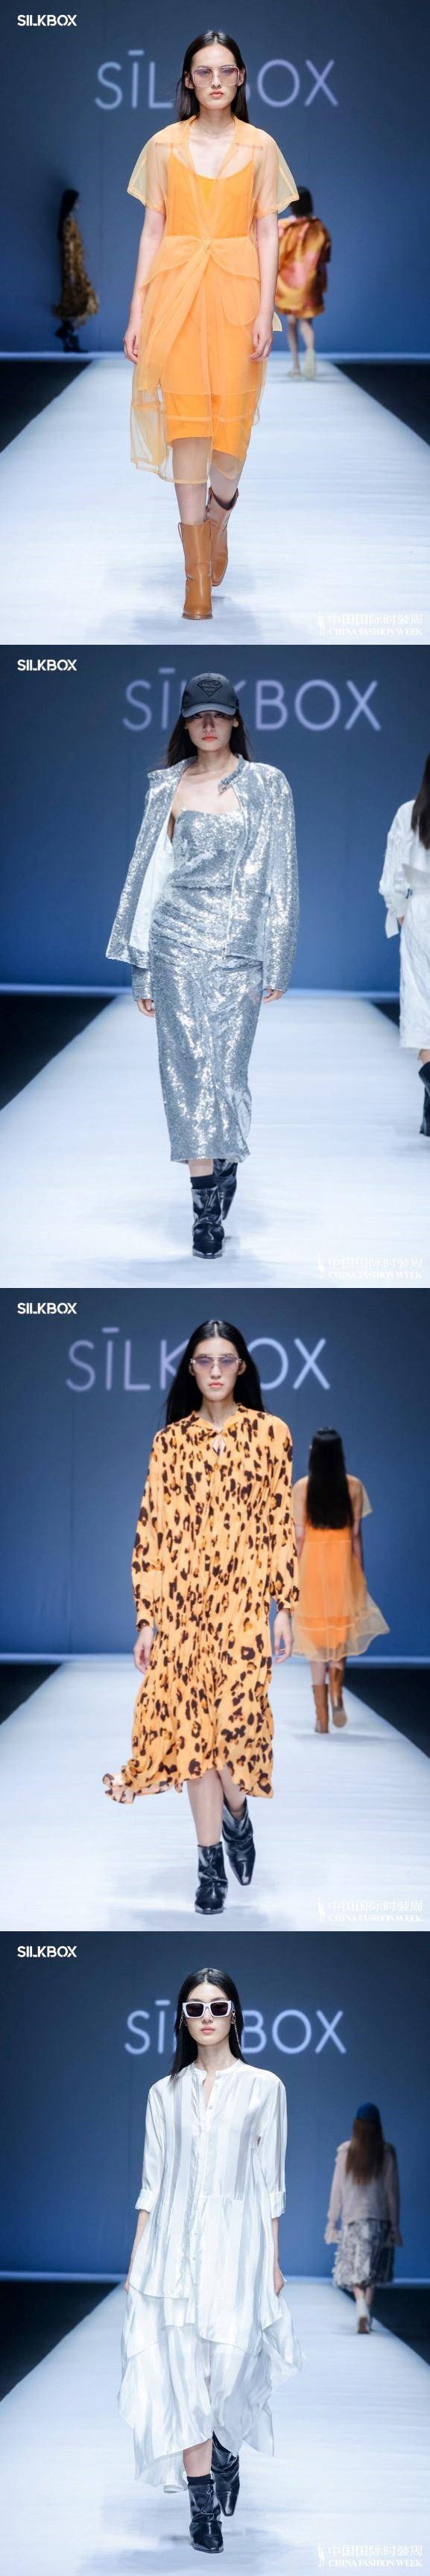 Silk box携手李文耀登陆中国国际时装周